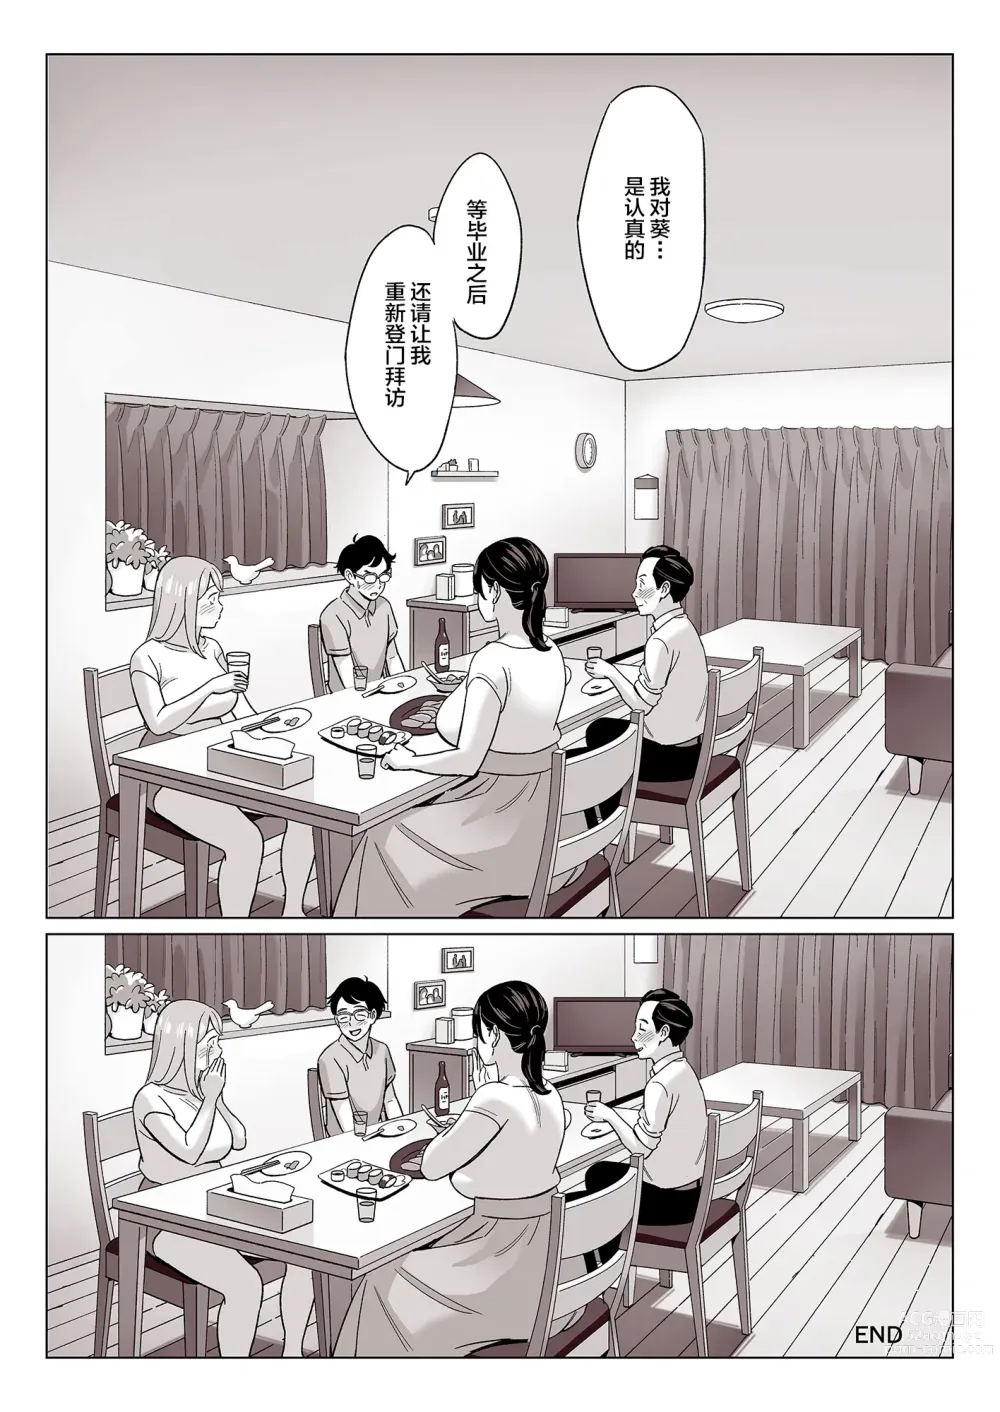 Page 276 of manga Muchi Niku Heaven de Pan Pan Pan